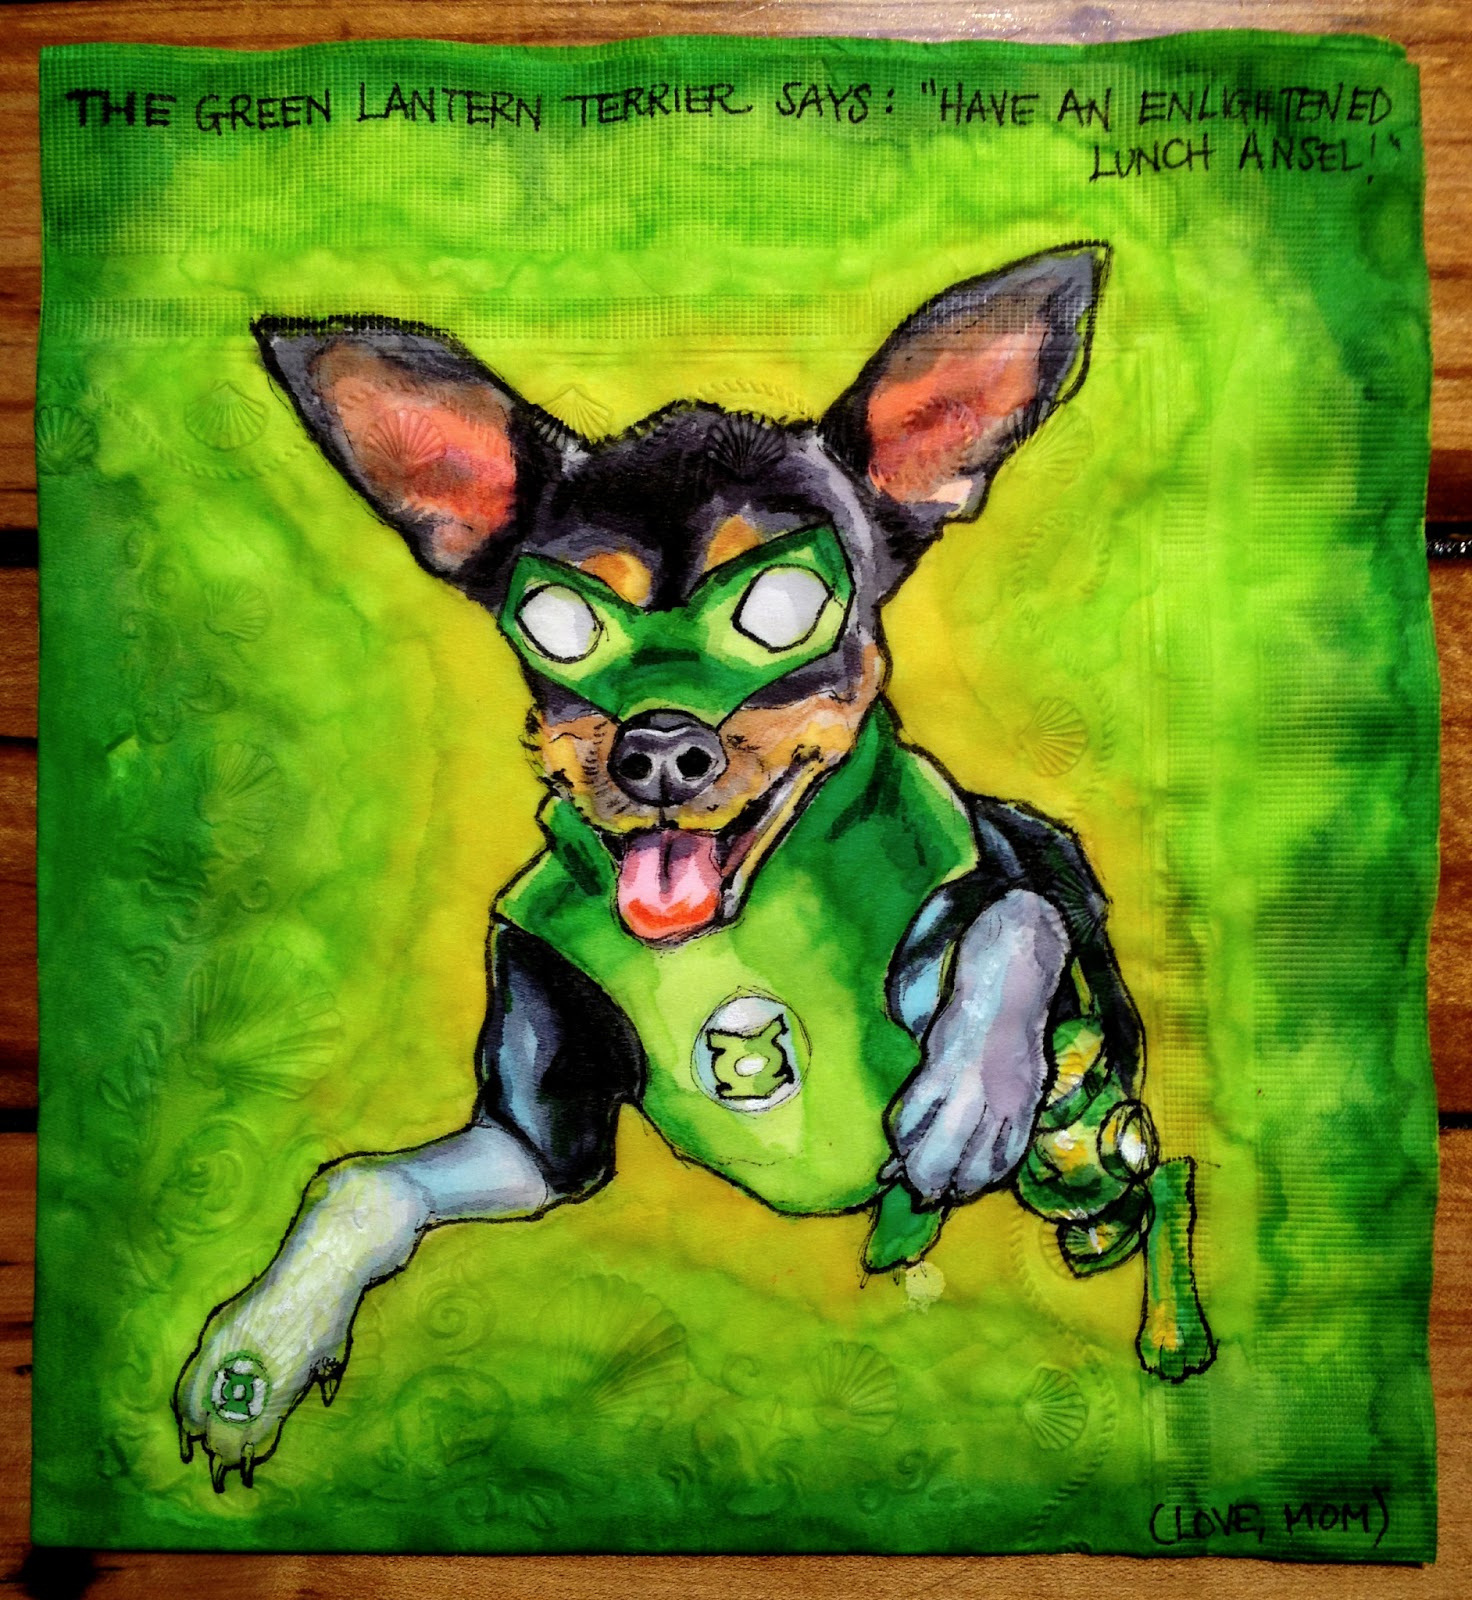 green lanterns dog - The Green Lantern Terrier Says "Have An Enletened Punch Anselis Cene Vom